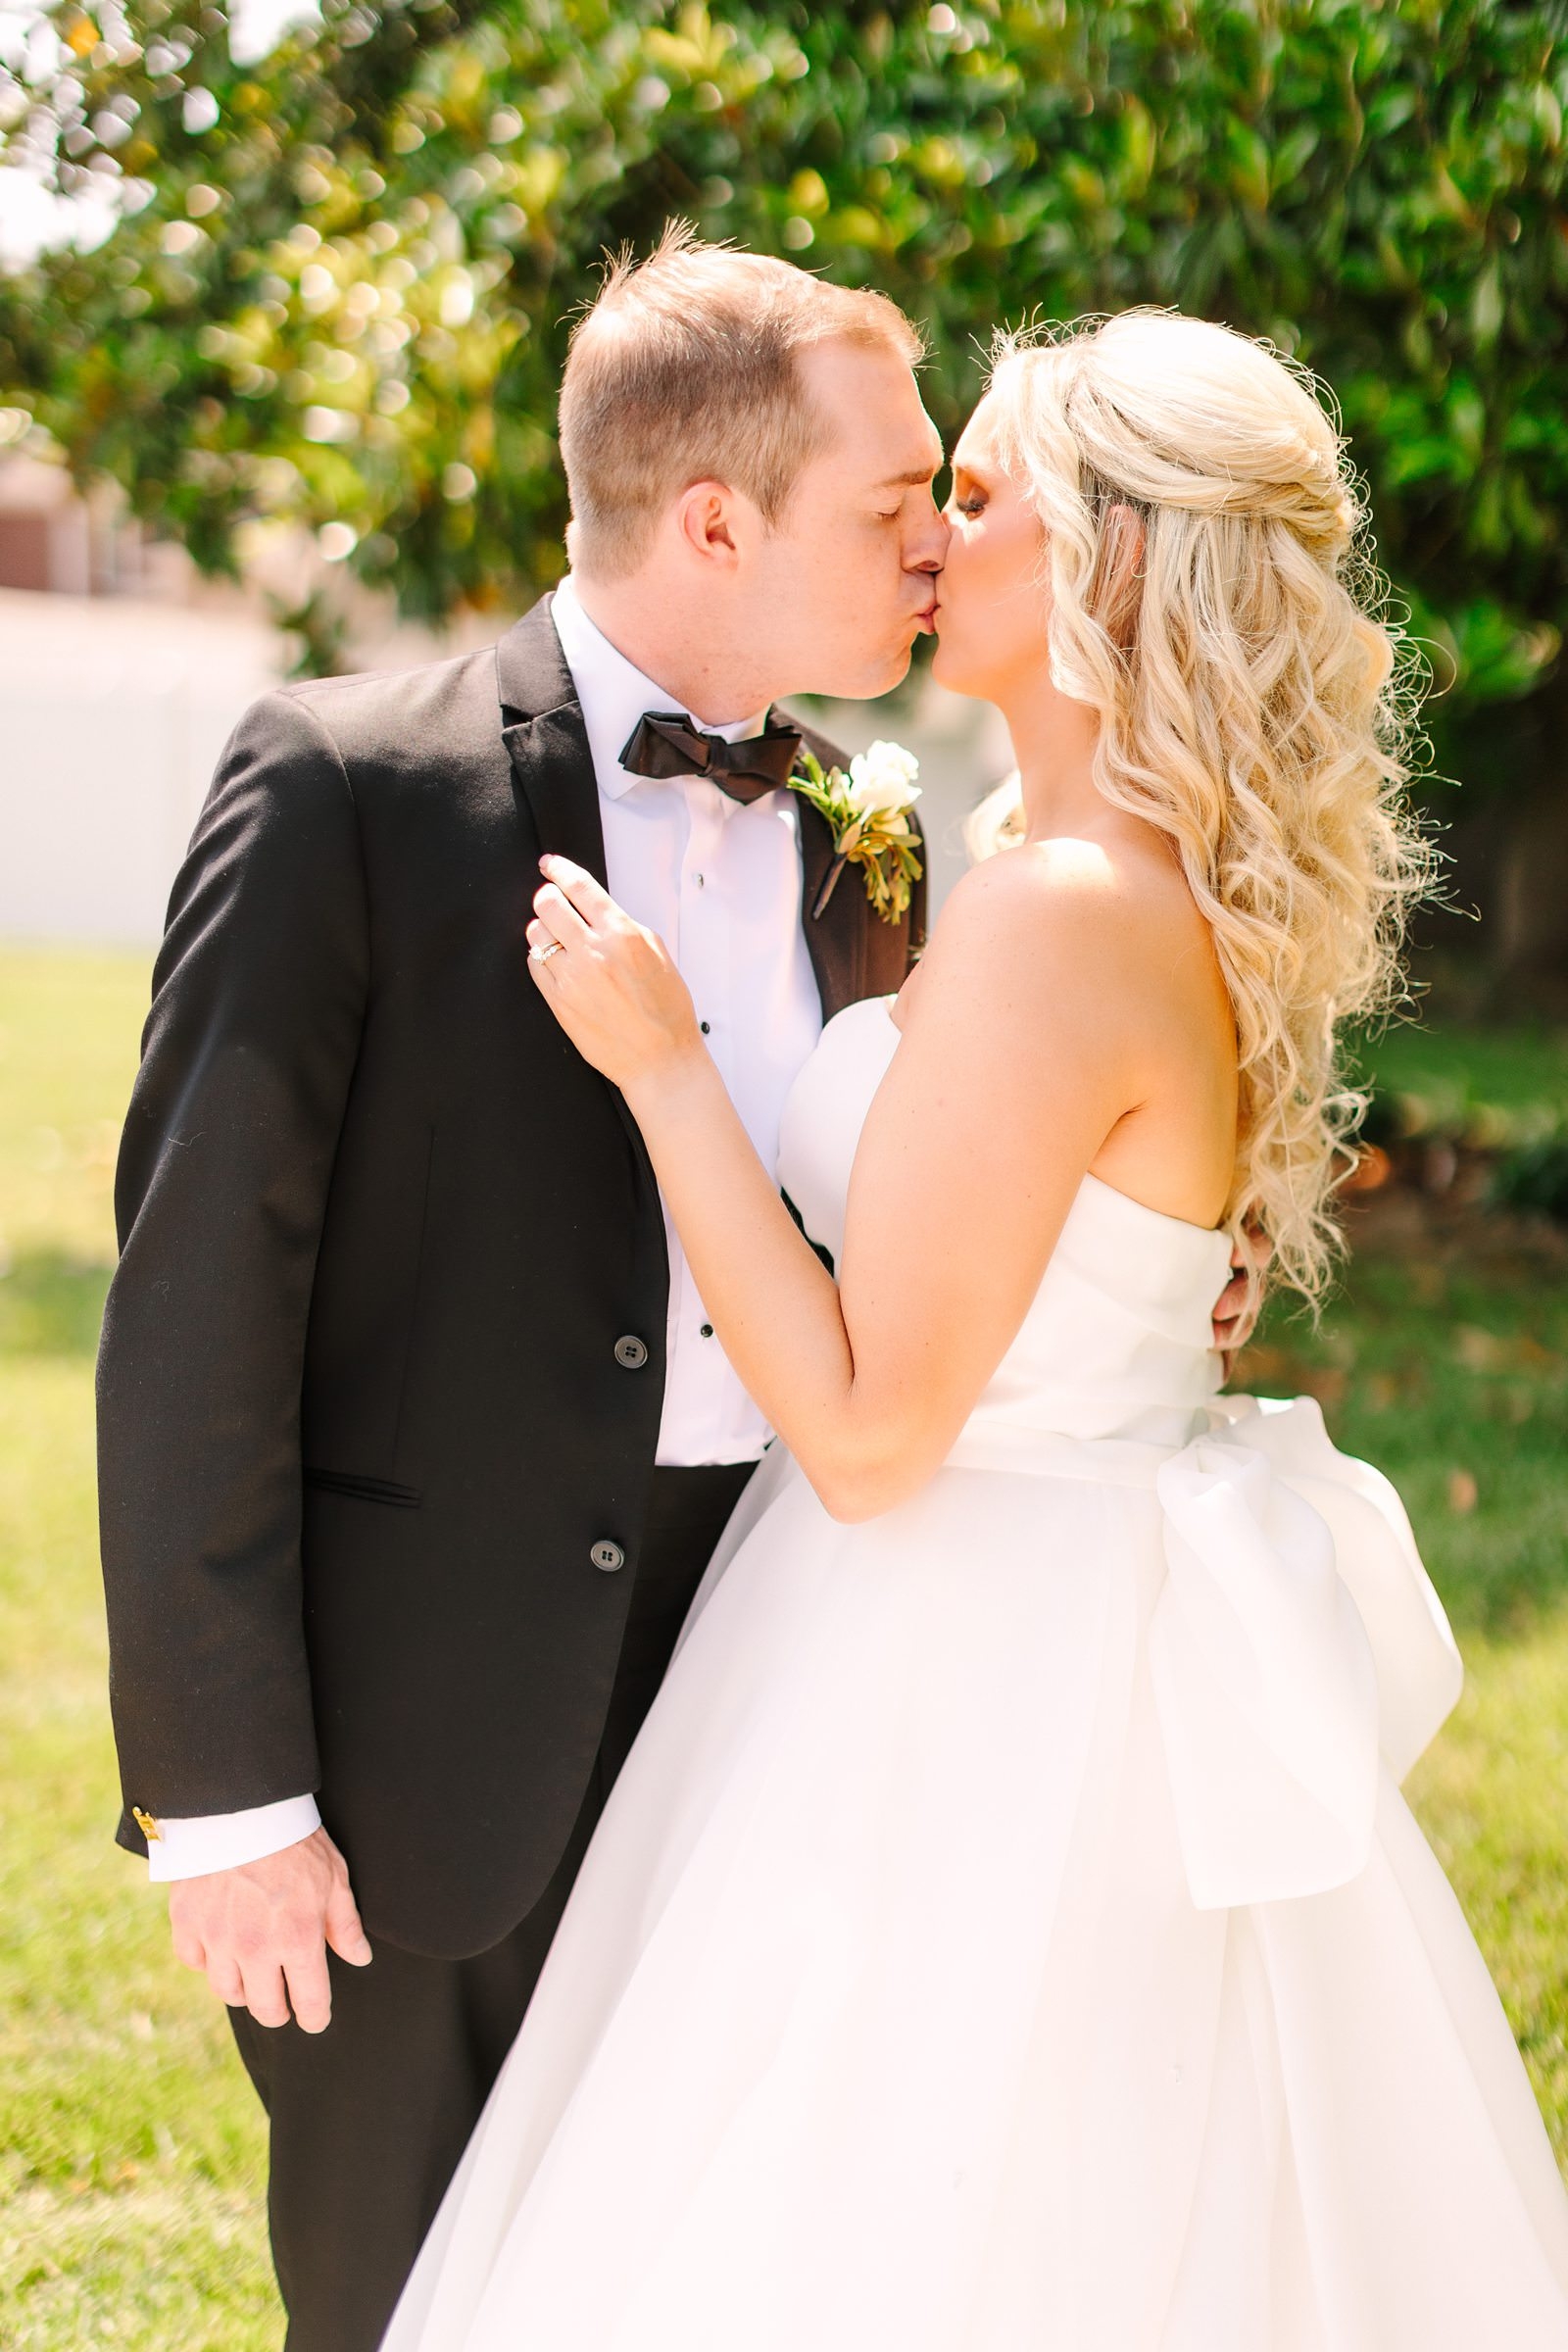 A Downtown Owensboro Wedding at River Park Center | Kaitlin & Justin070.jpg